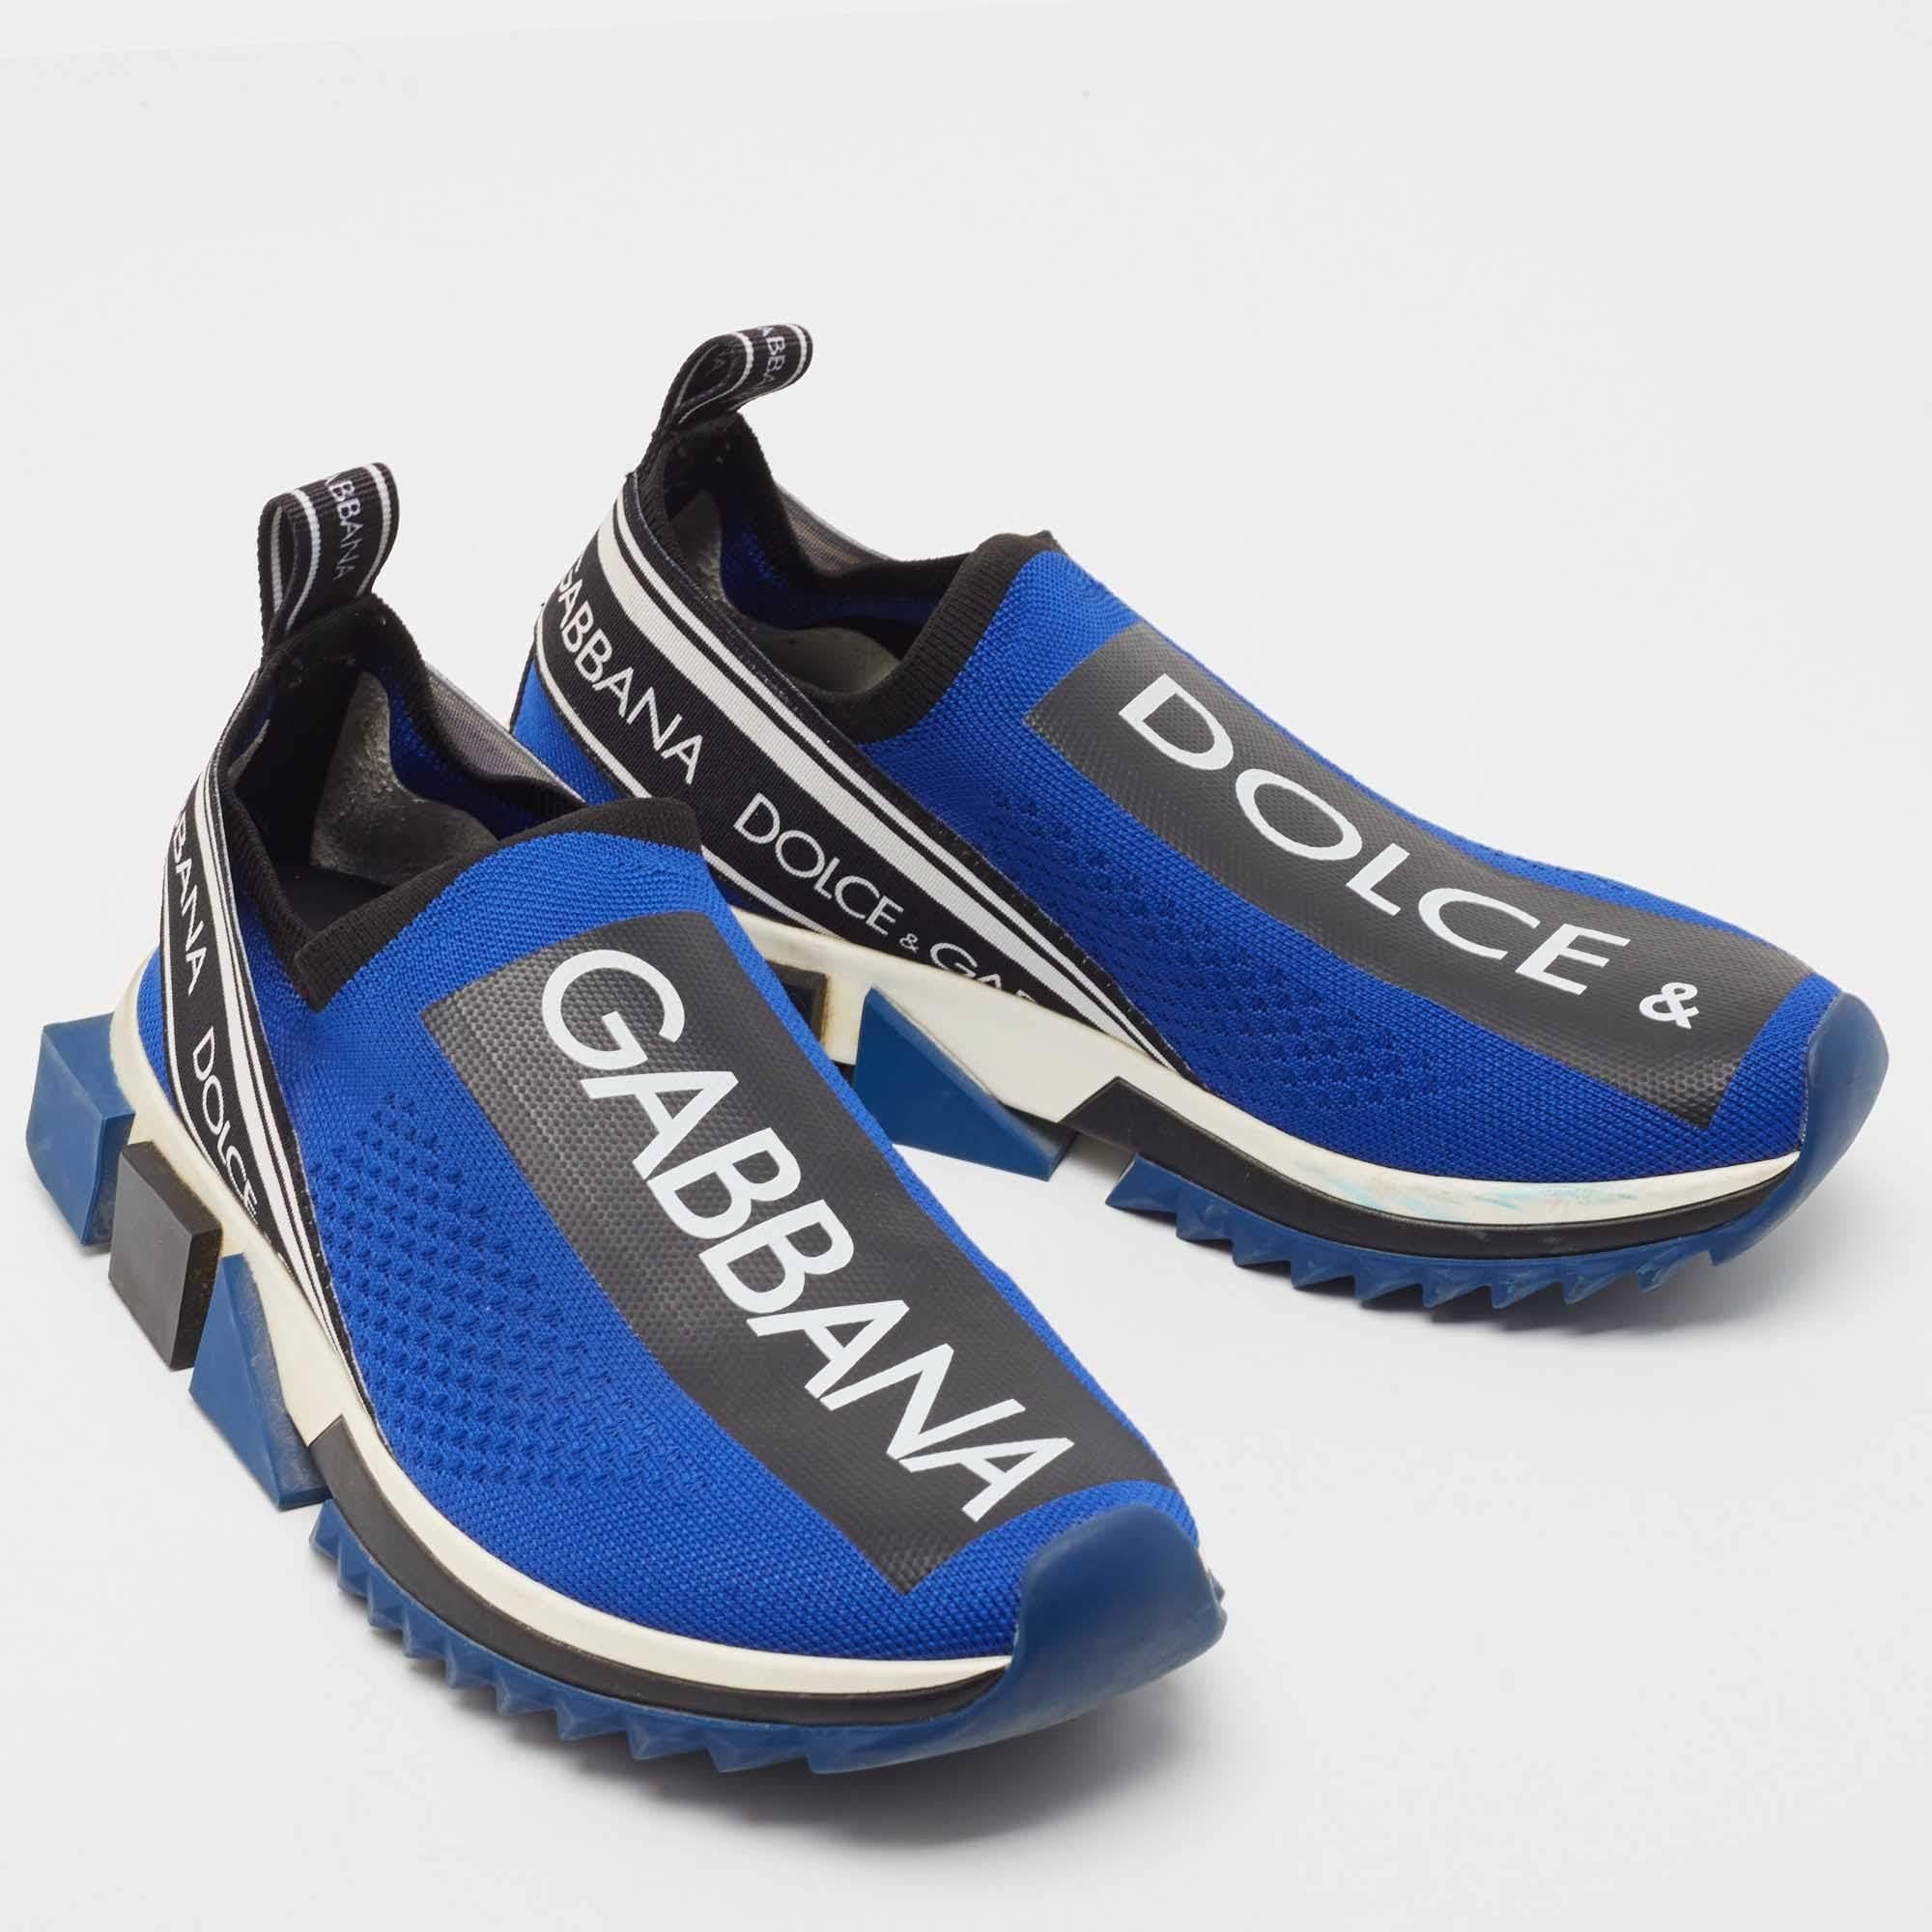 Dolce & Gabbana Blue/Black Knit Fabric Sorrento Sneakers Size 39 7